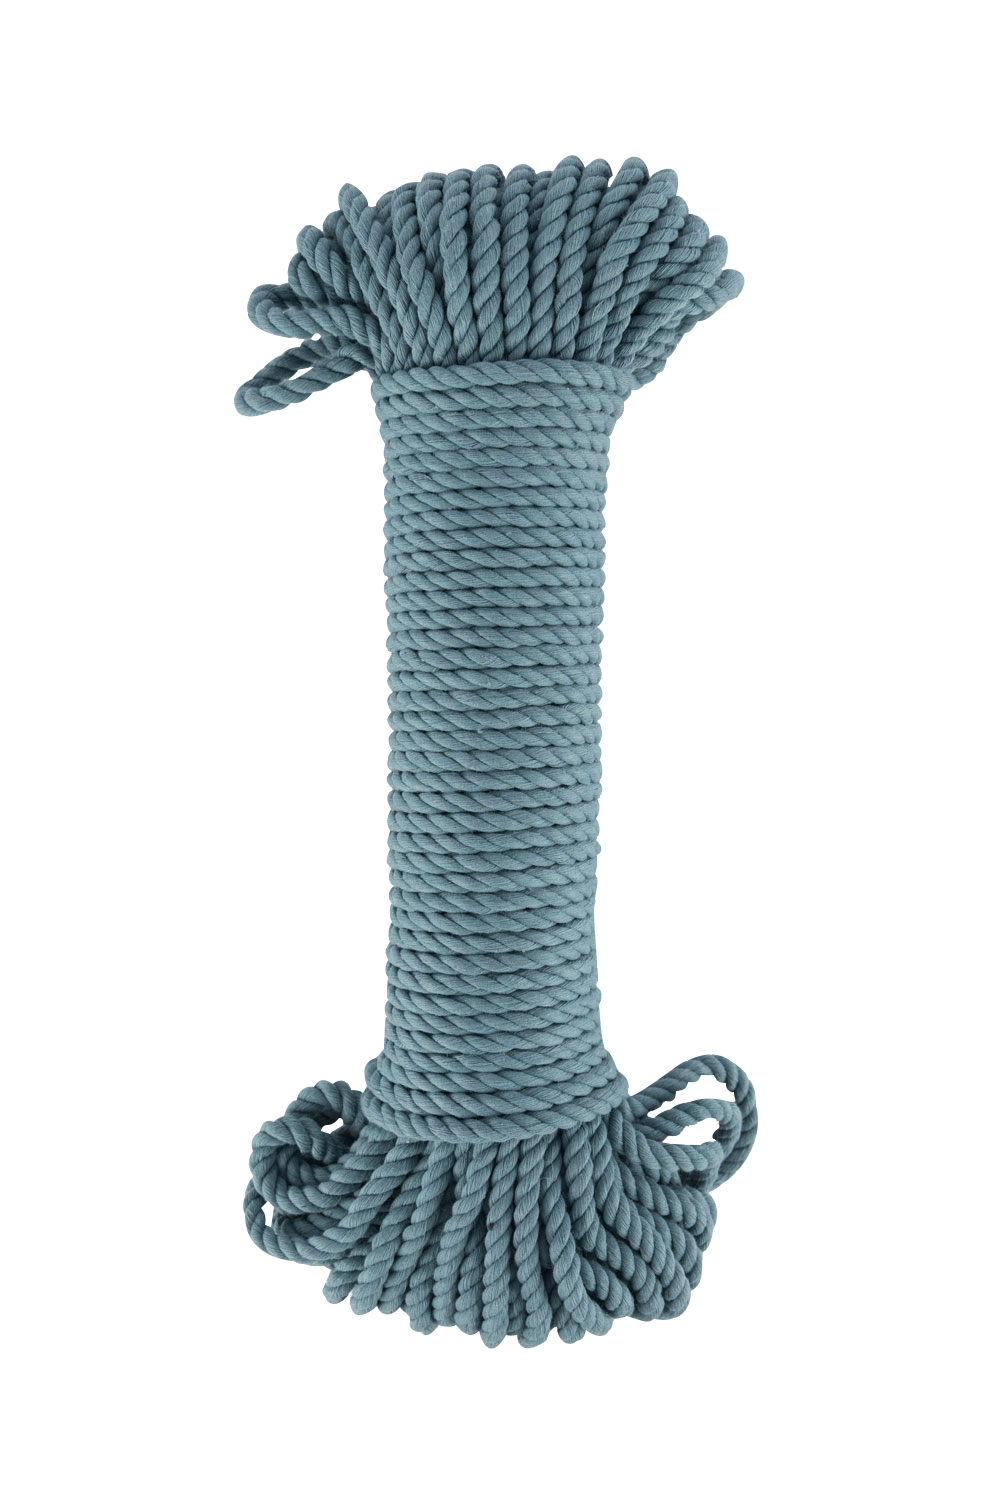 5mm cotton rope bundle in 31 colors: ocean